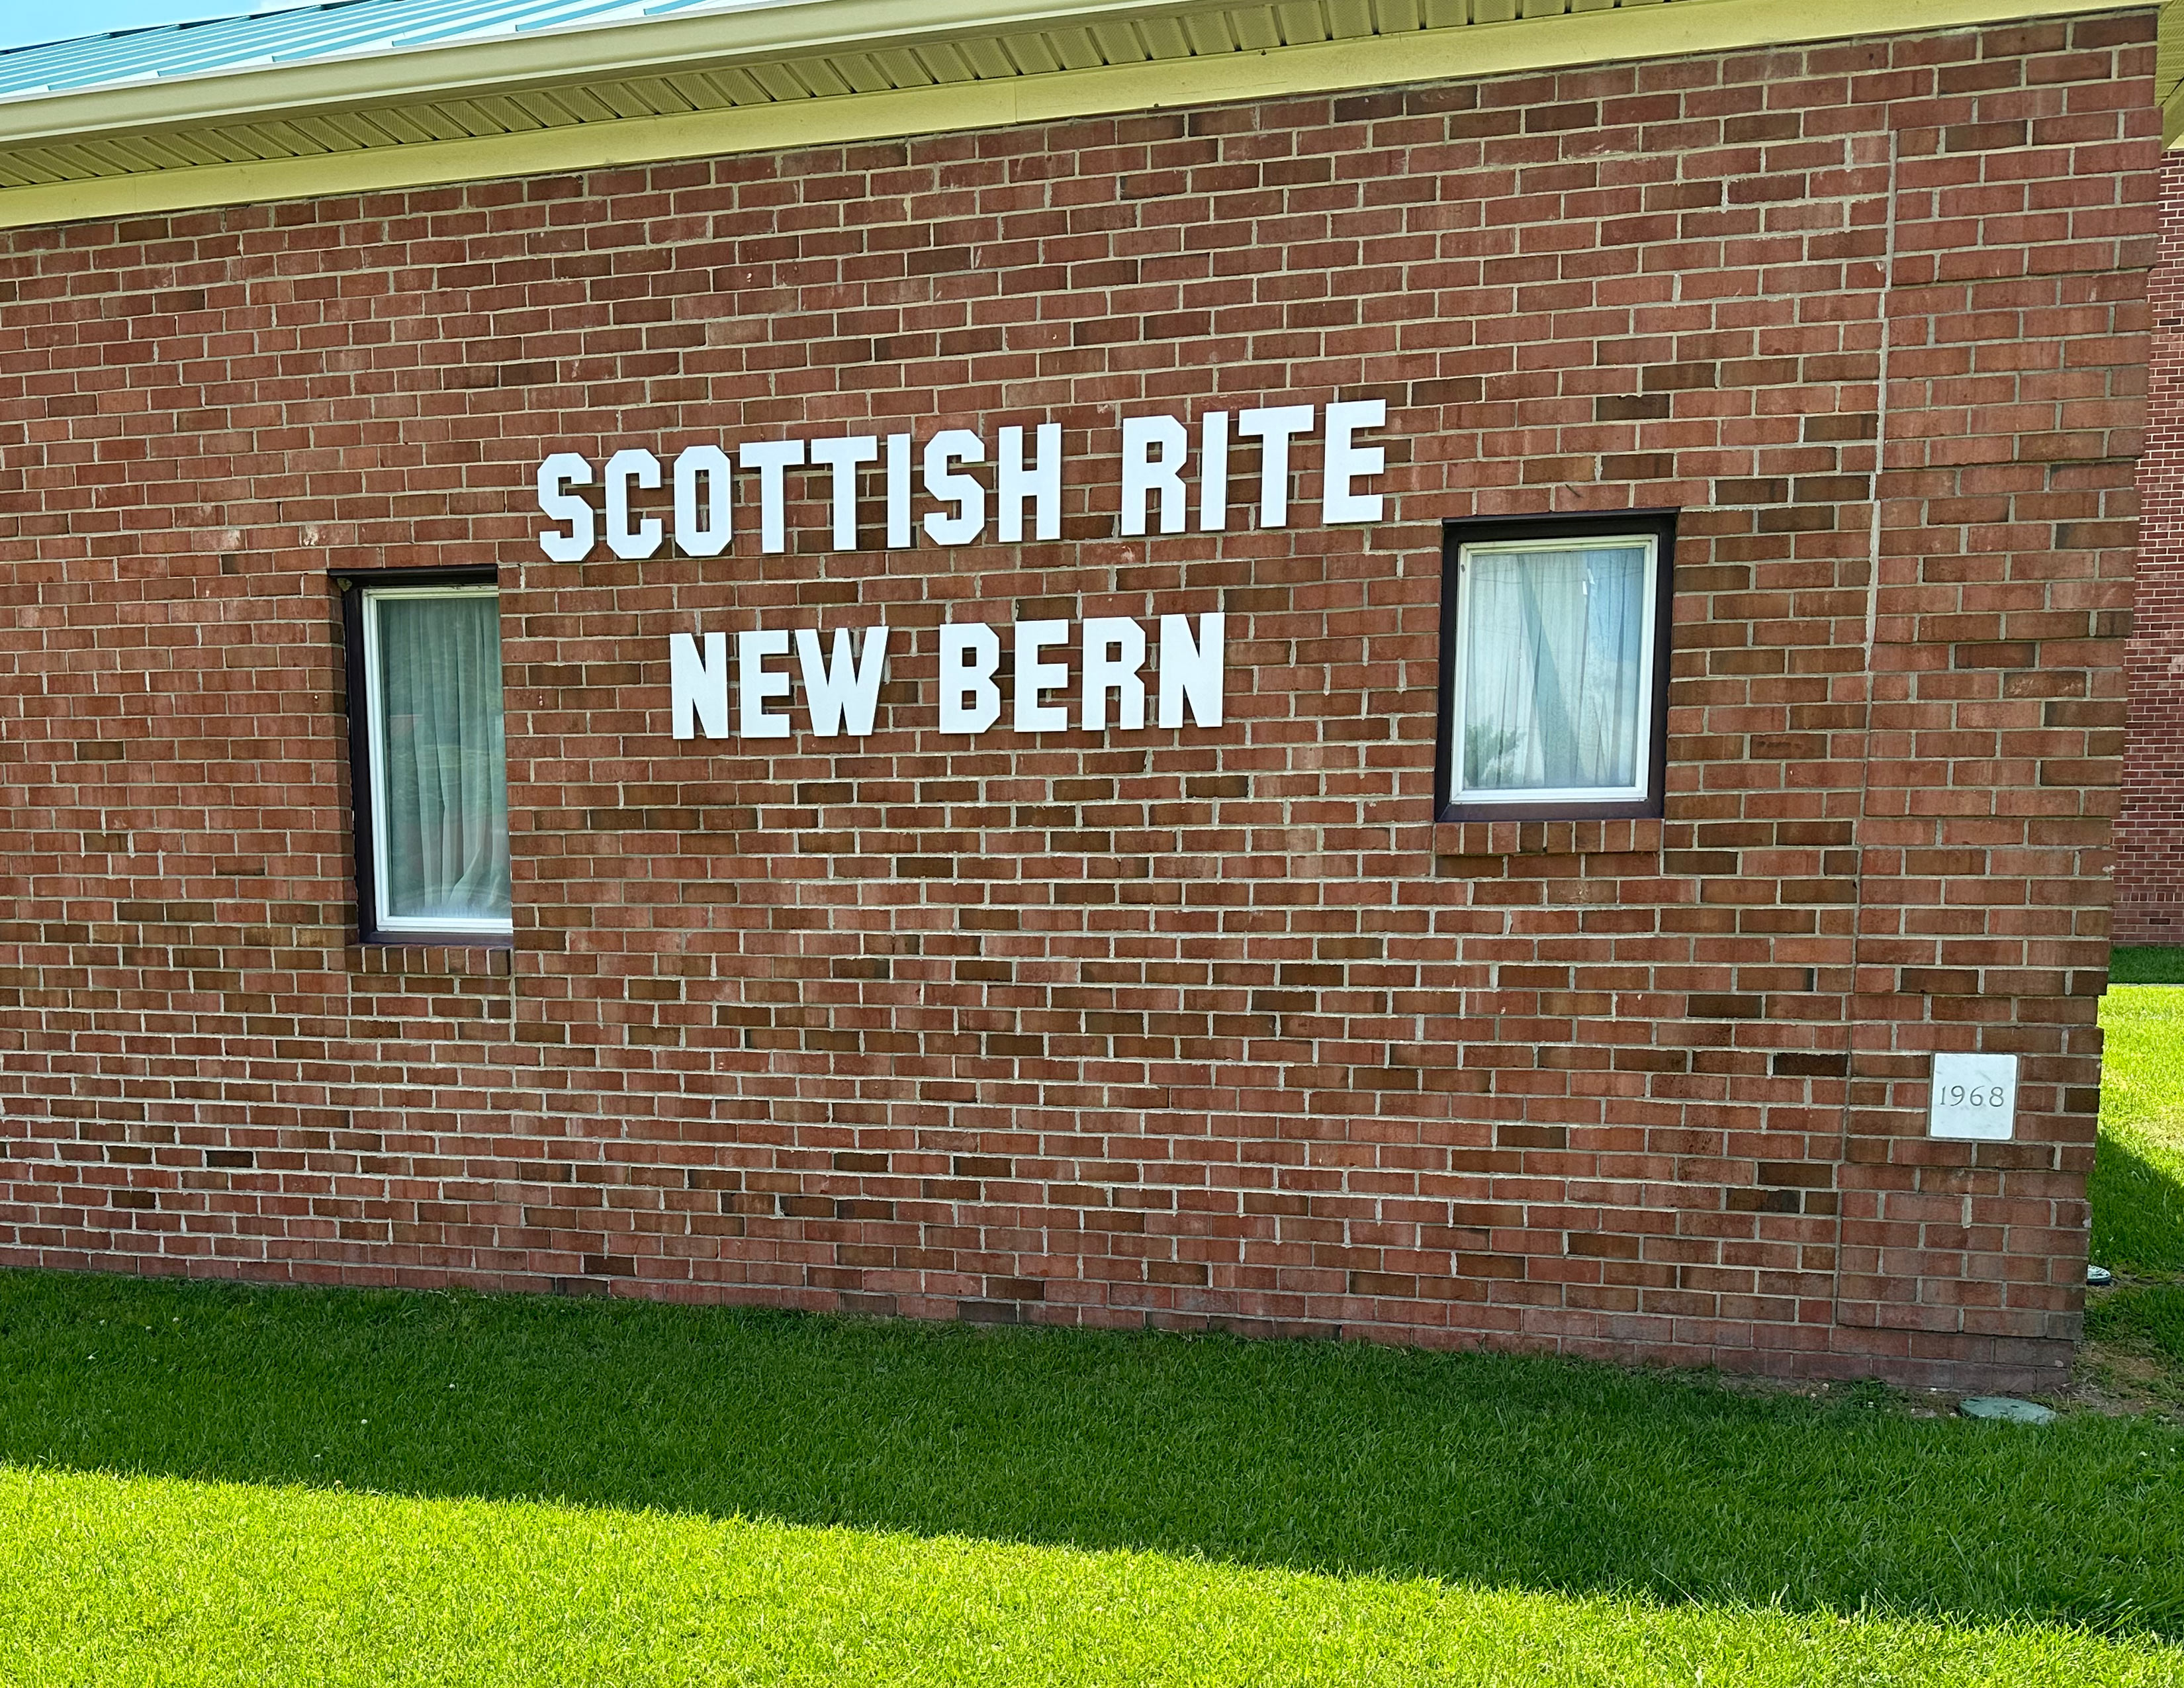 New Bern Scottish Rite Building